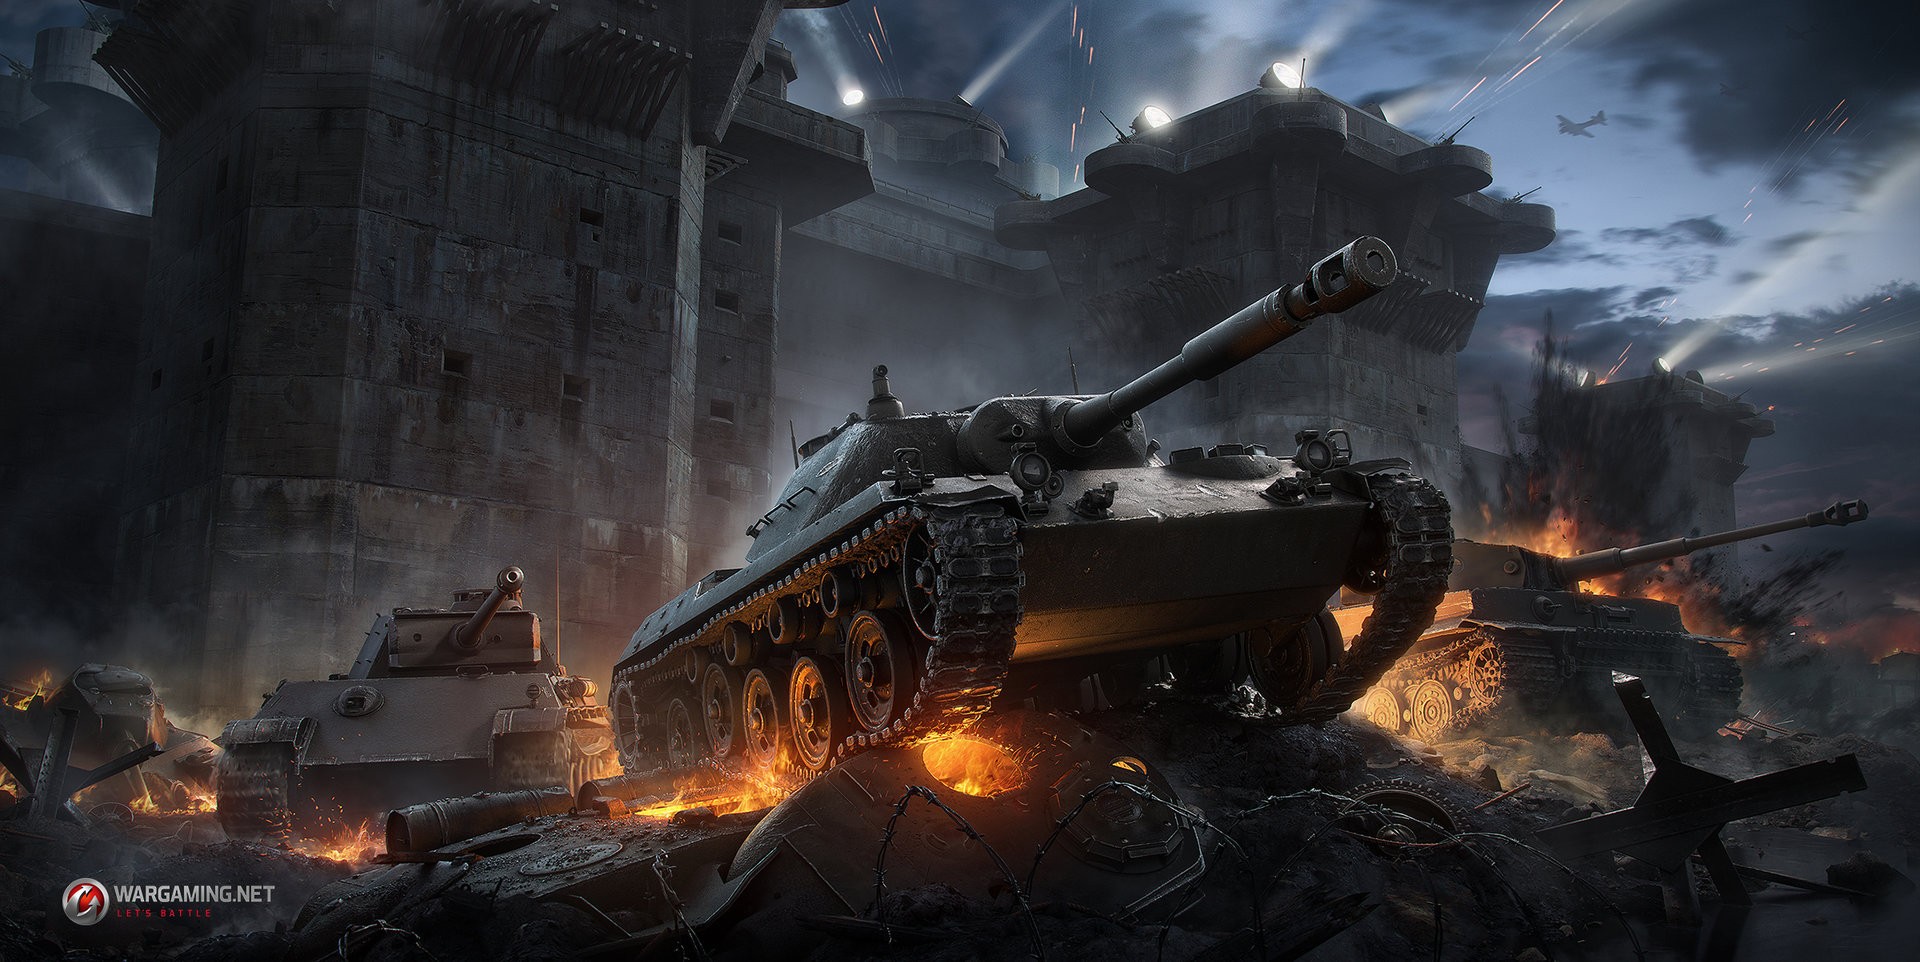 General 1920x962 World of Tanks tank Spahpanzer Ru 251 PC gaming ArtStation video game art military vehicle war vehicle